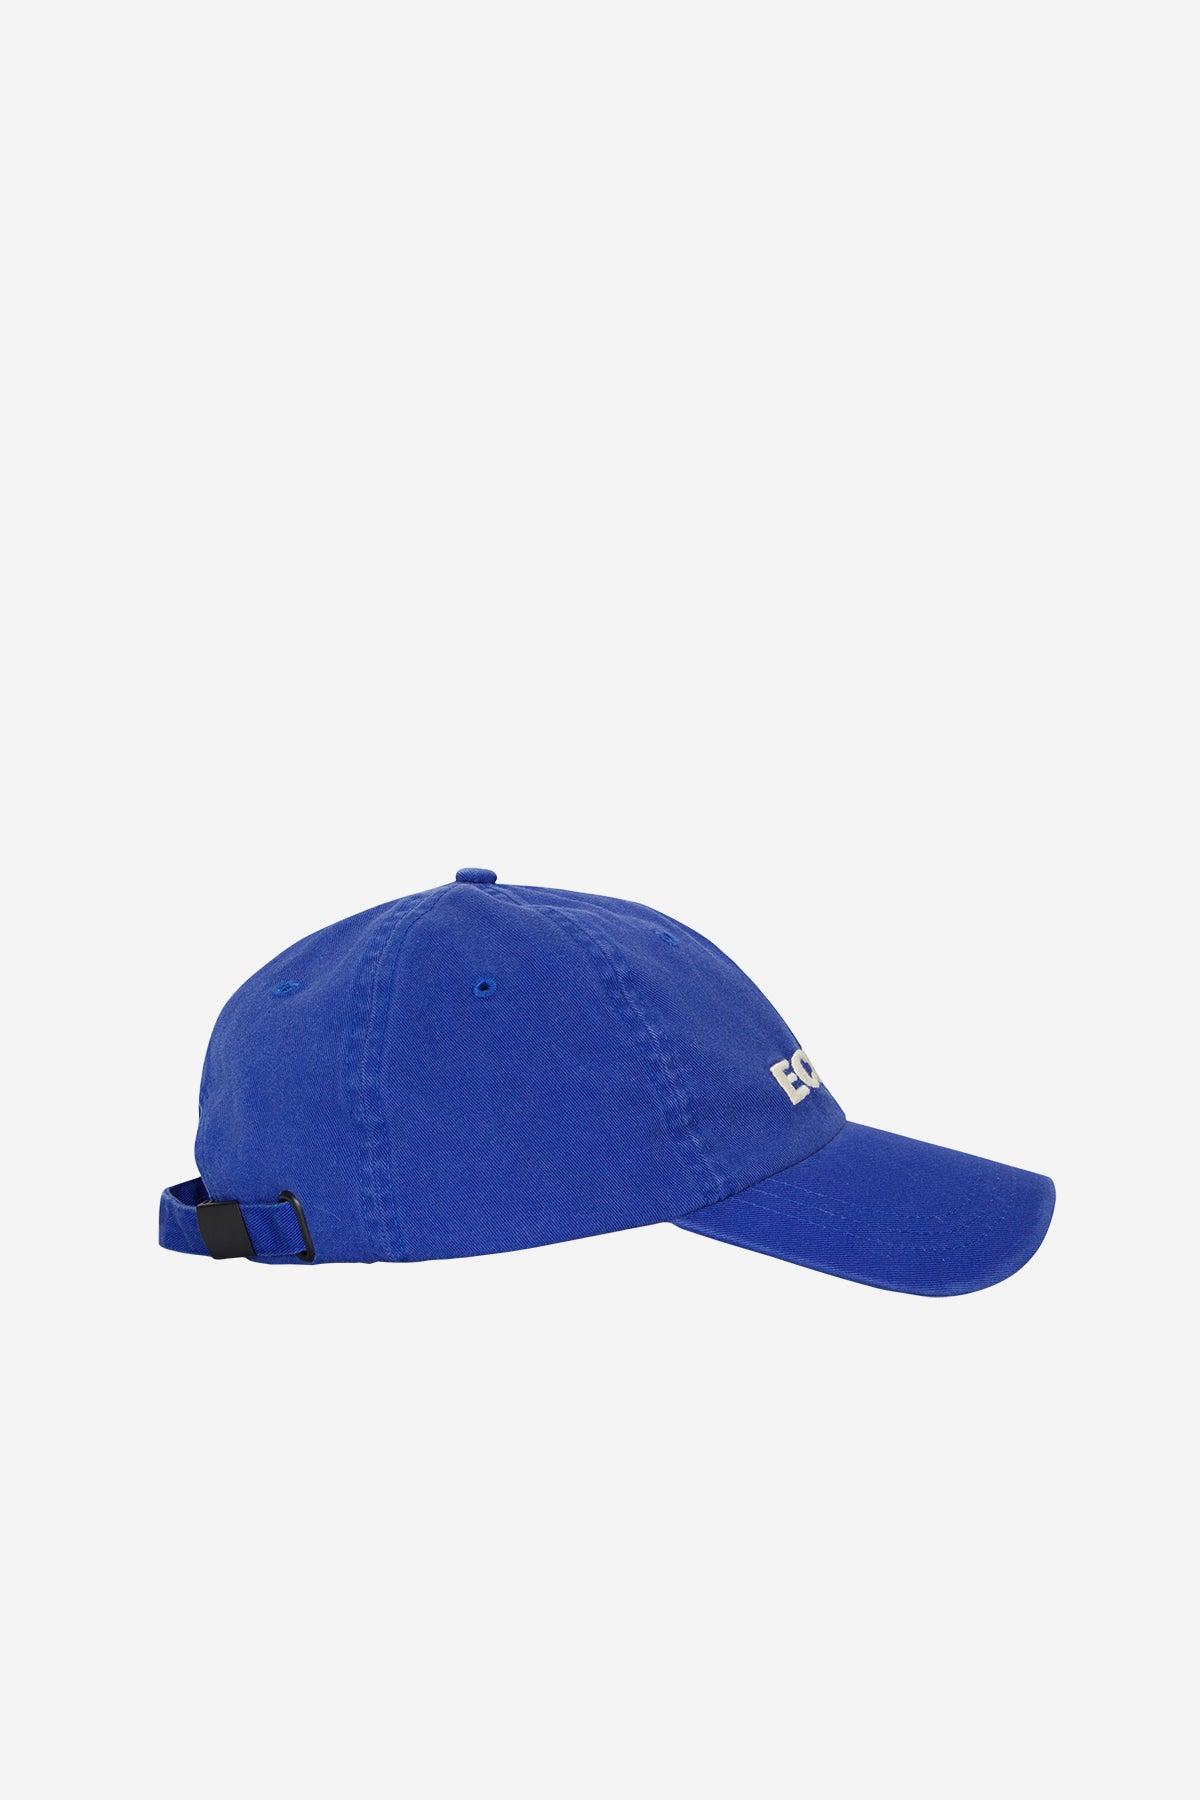 BLUE ECOALF CAP 